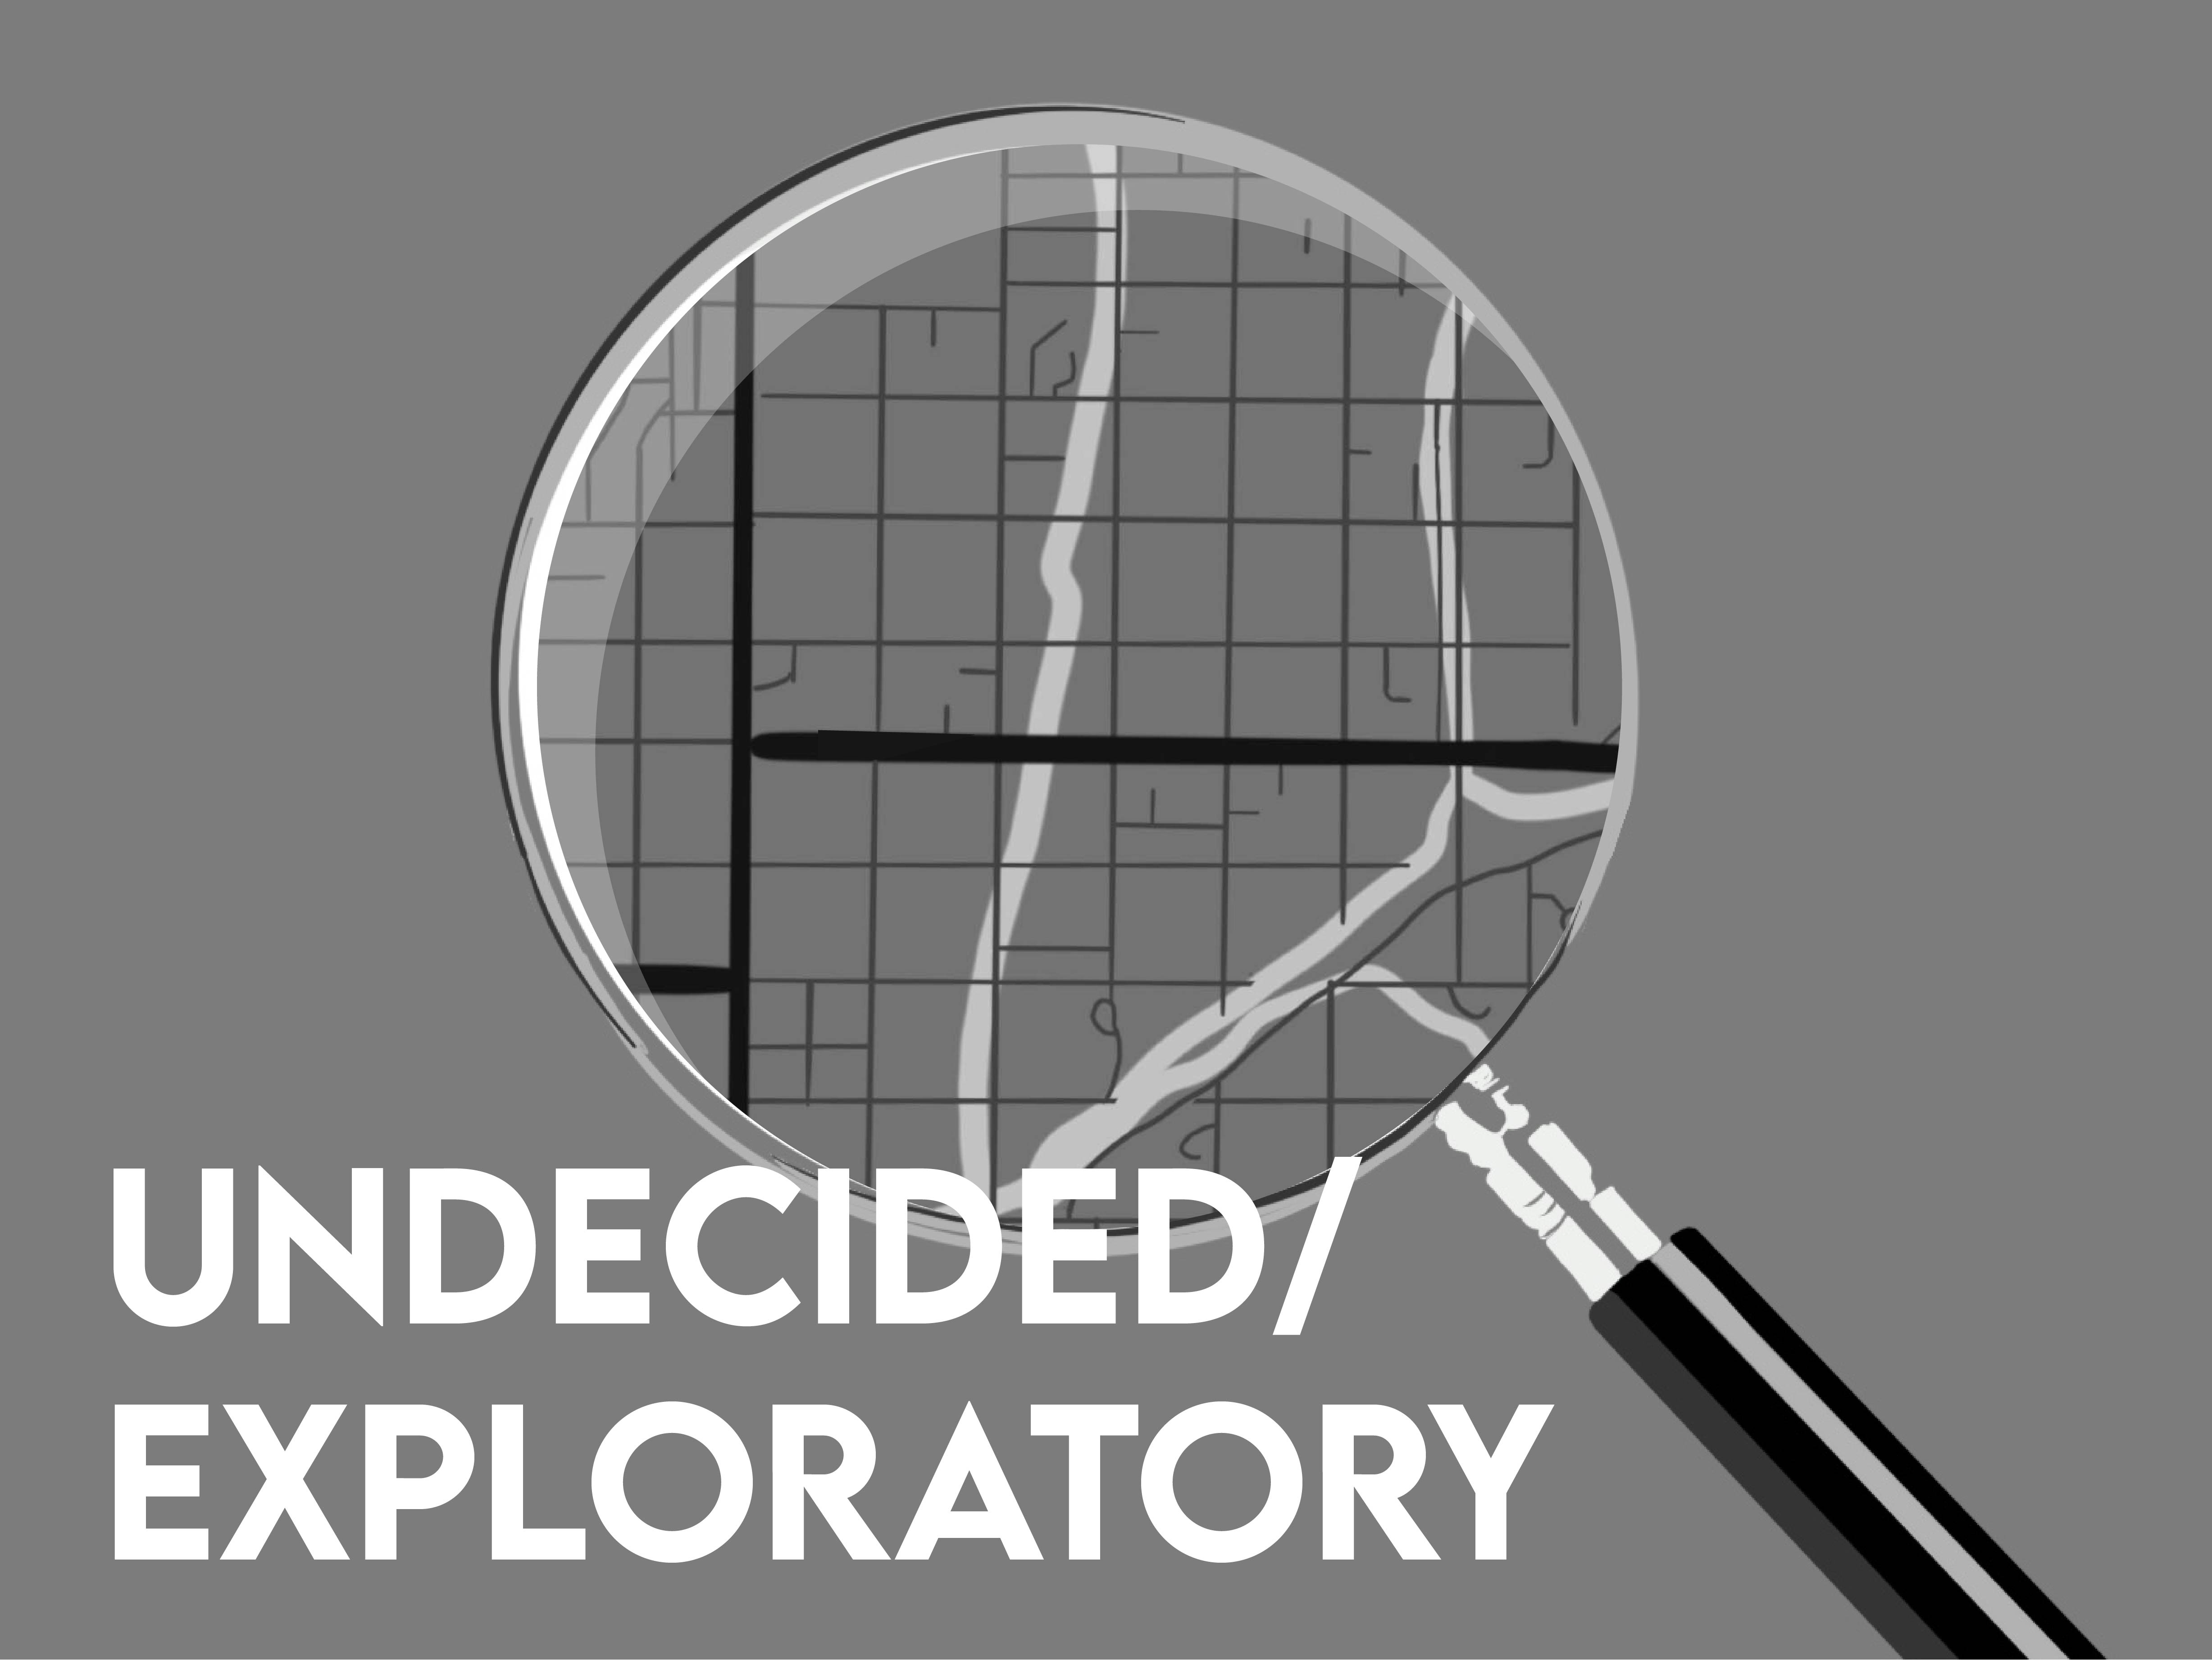 Undecided/Exploratory